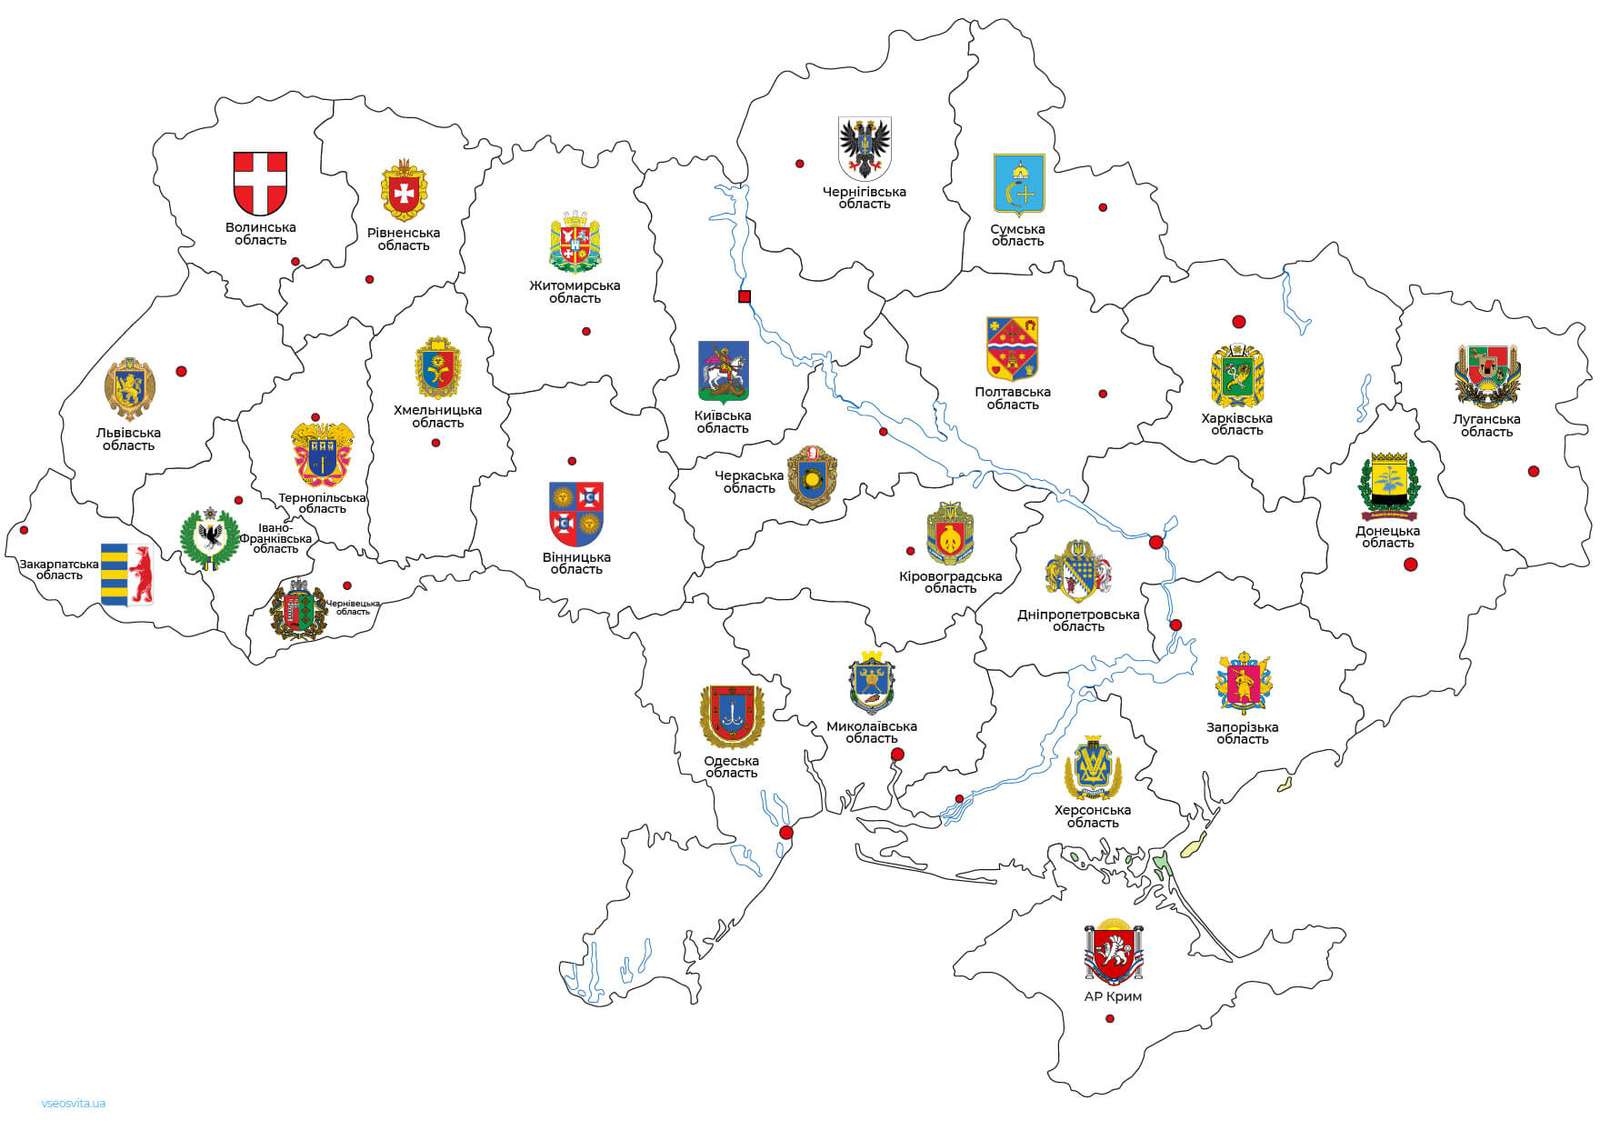 Mapa Ukrajiny online puzzle